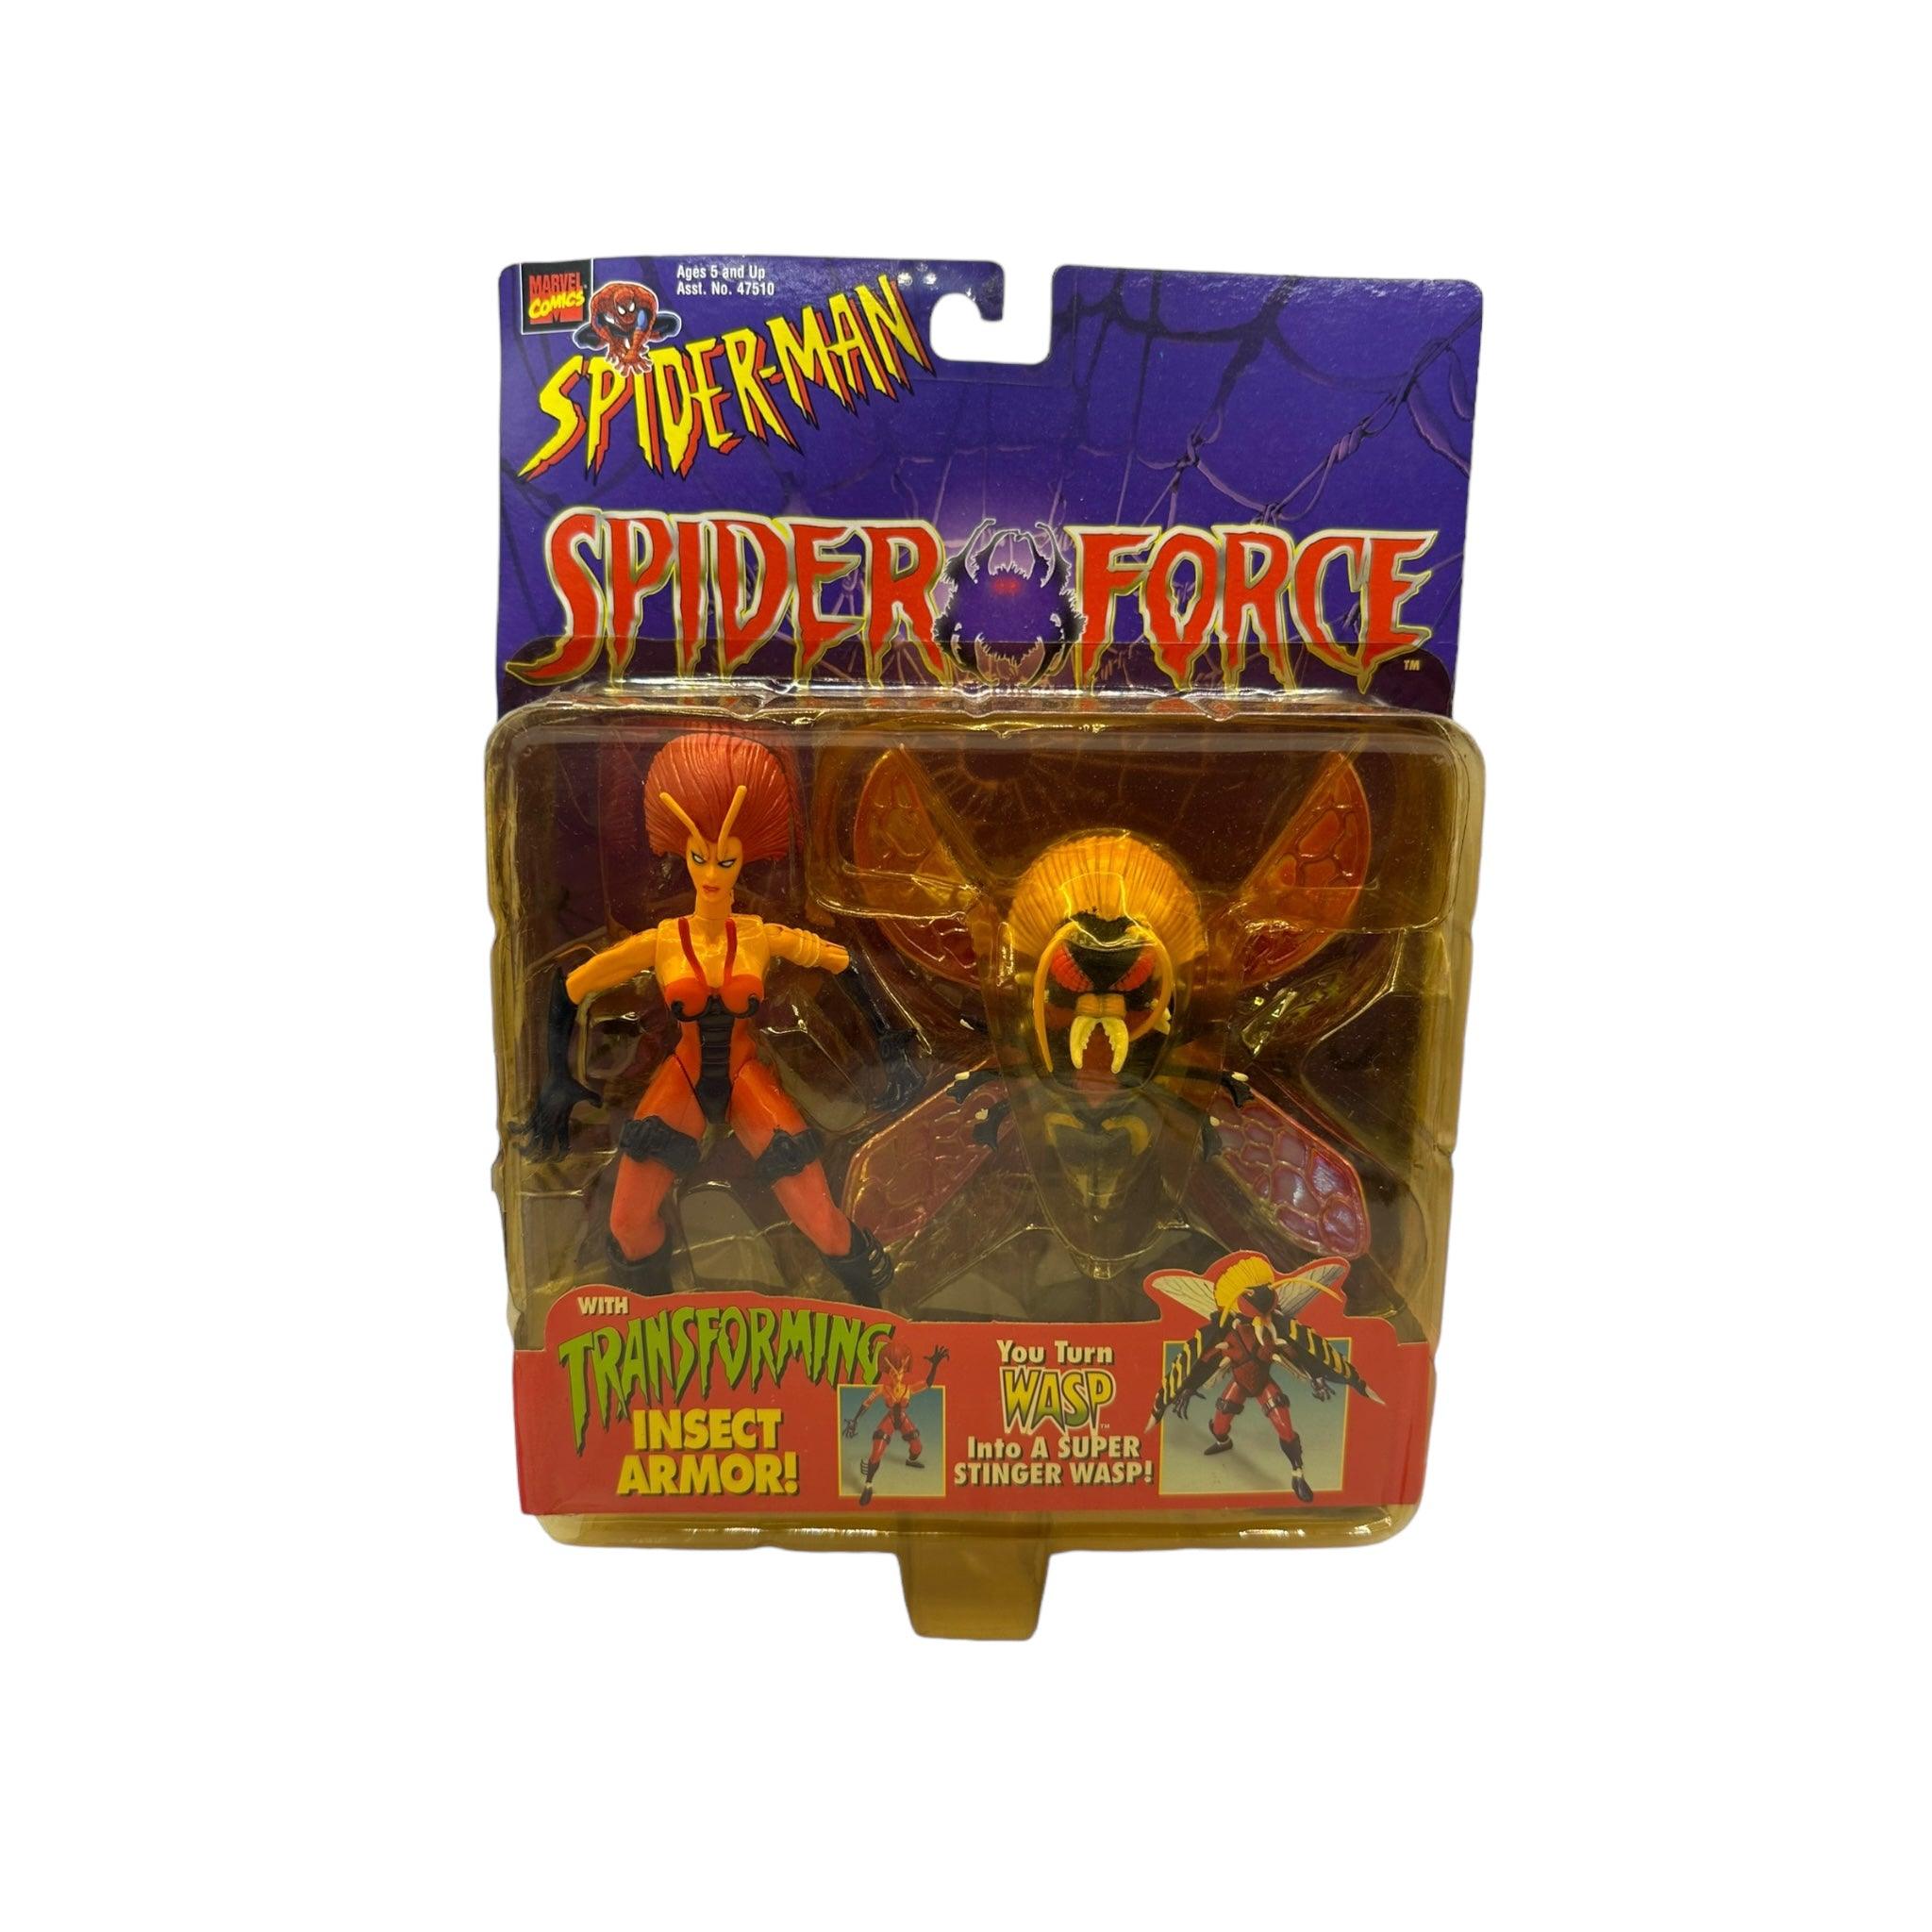 1997 TOYBIZ SPIDER-MAN SPIDER FORCE WASP AF (CRACKED/YELLOW BUBBLE)